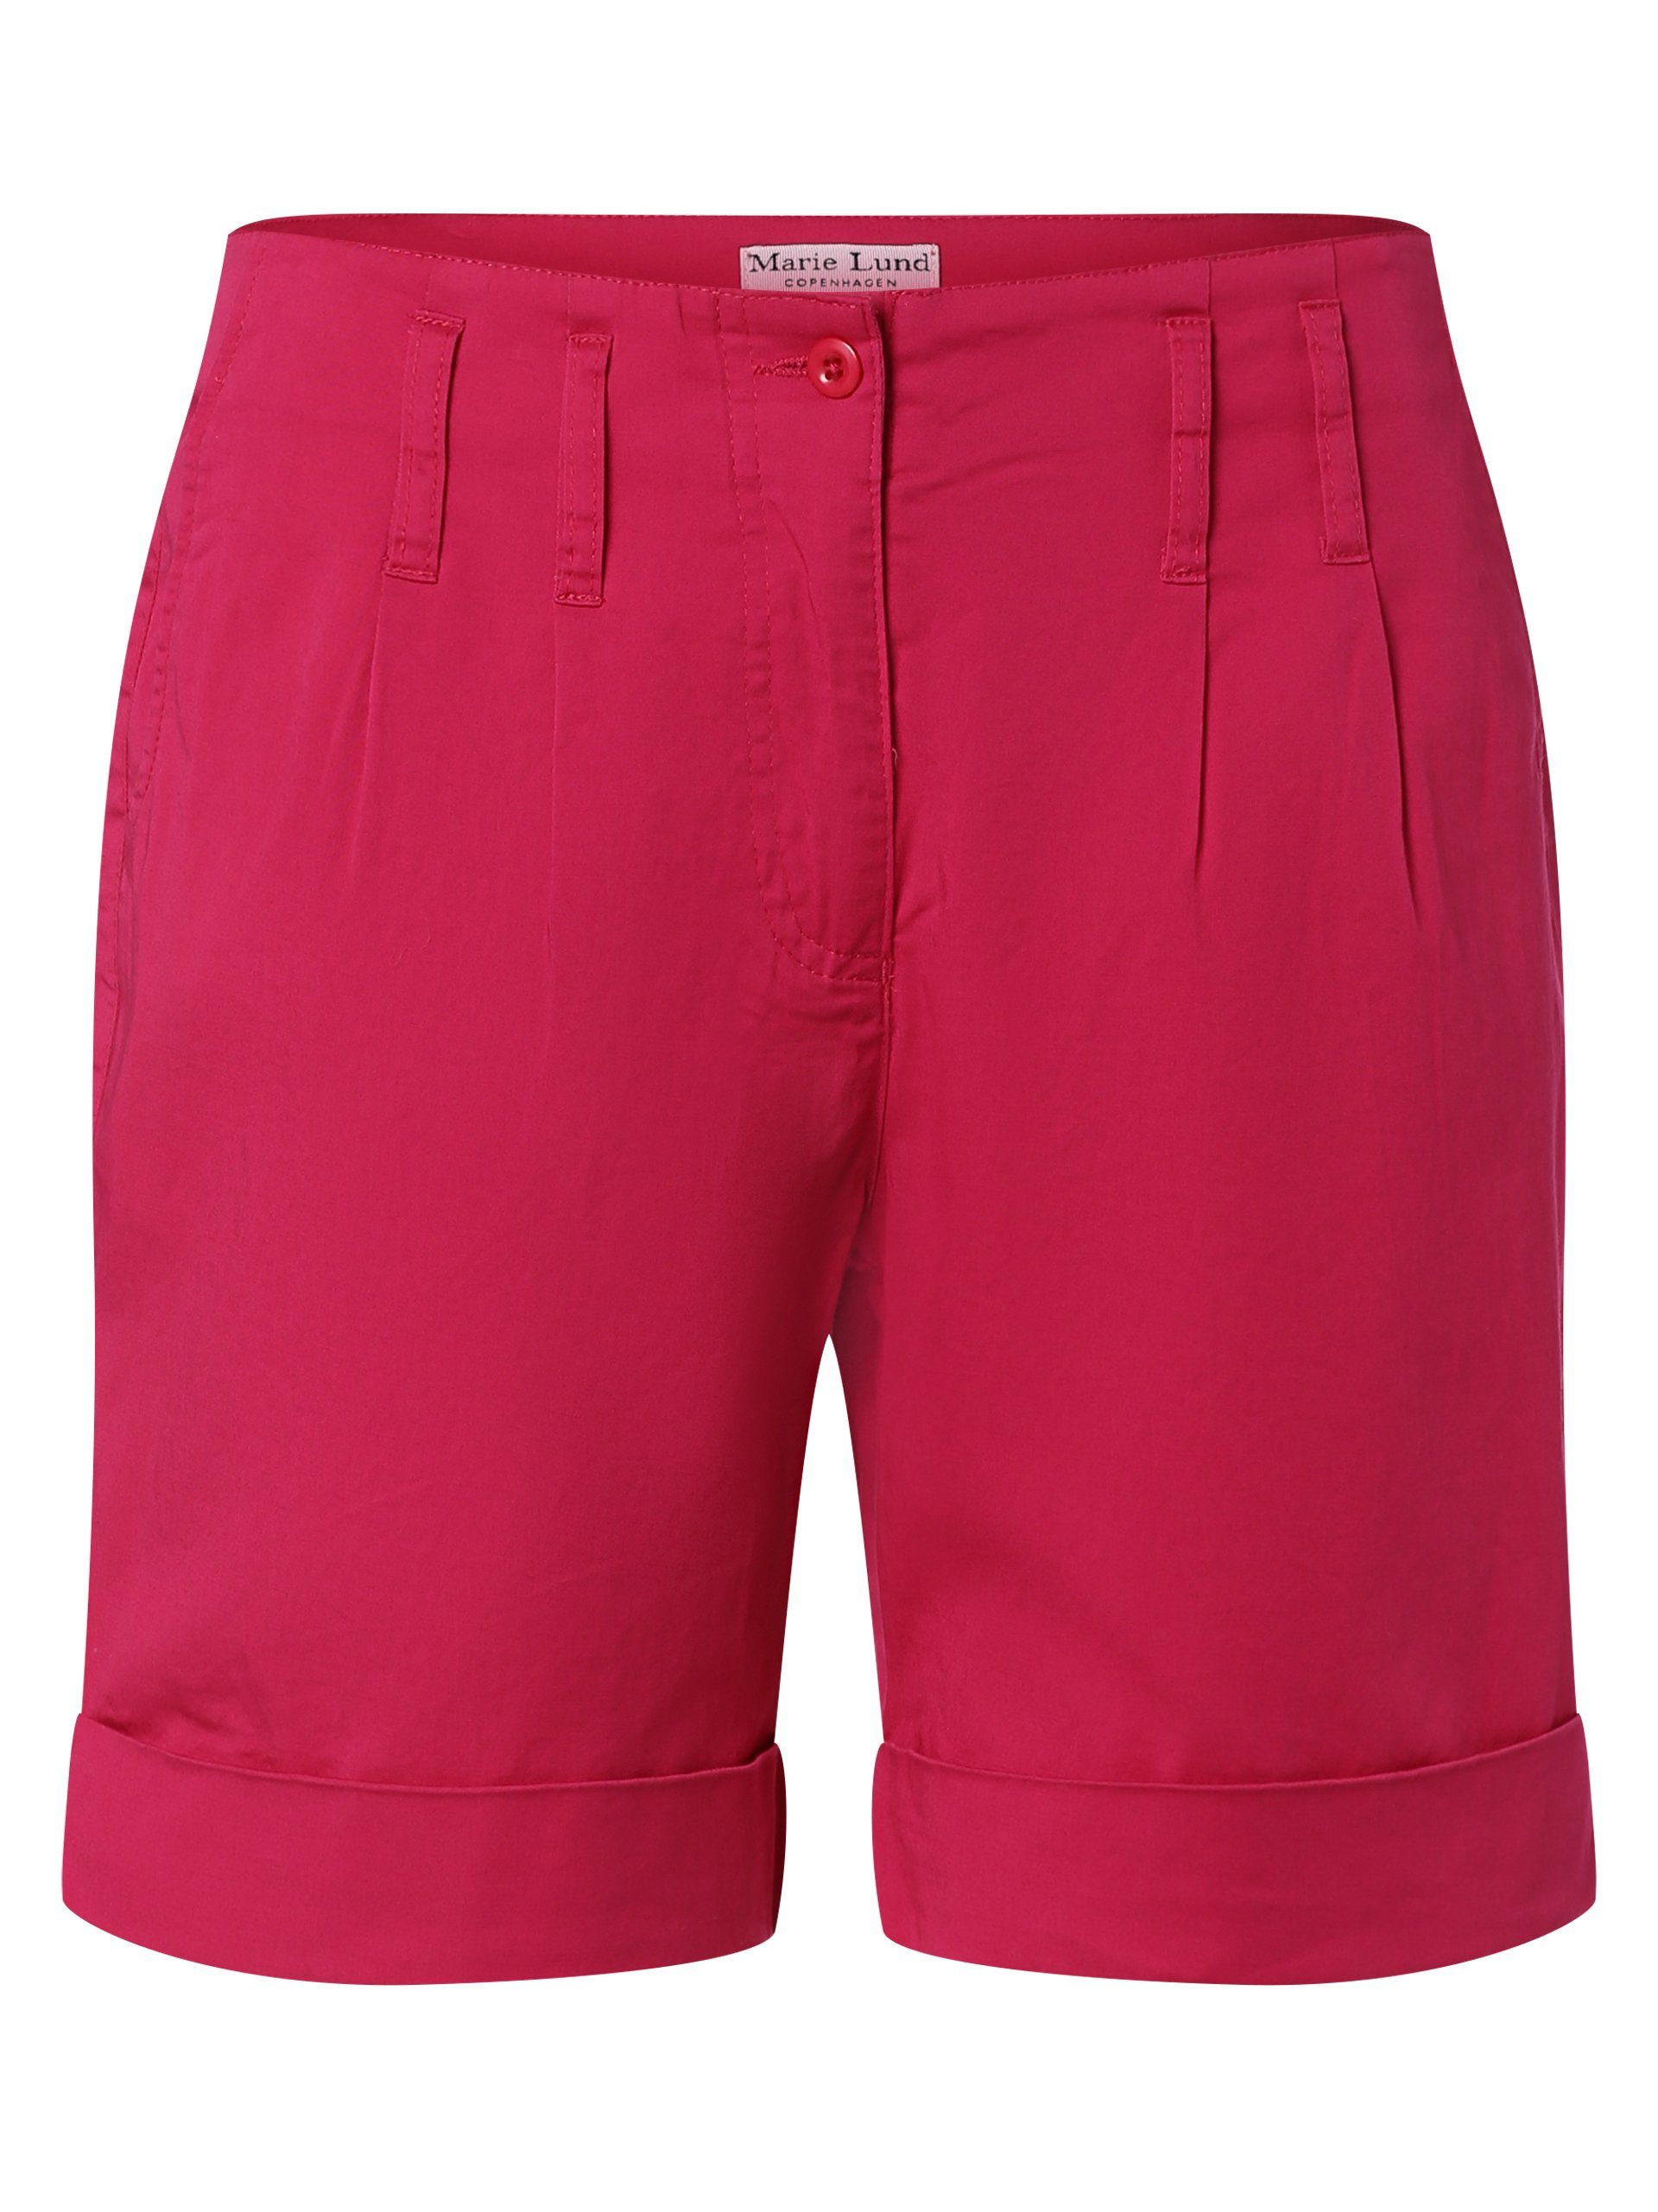 Shorts Marie pink Lund